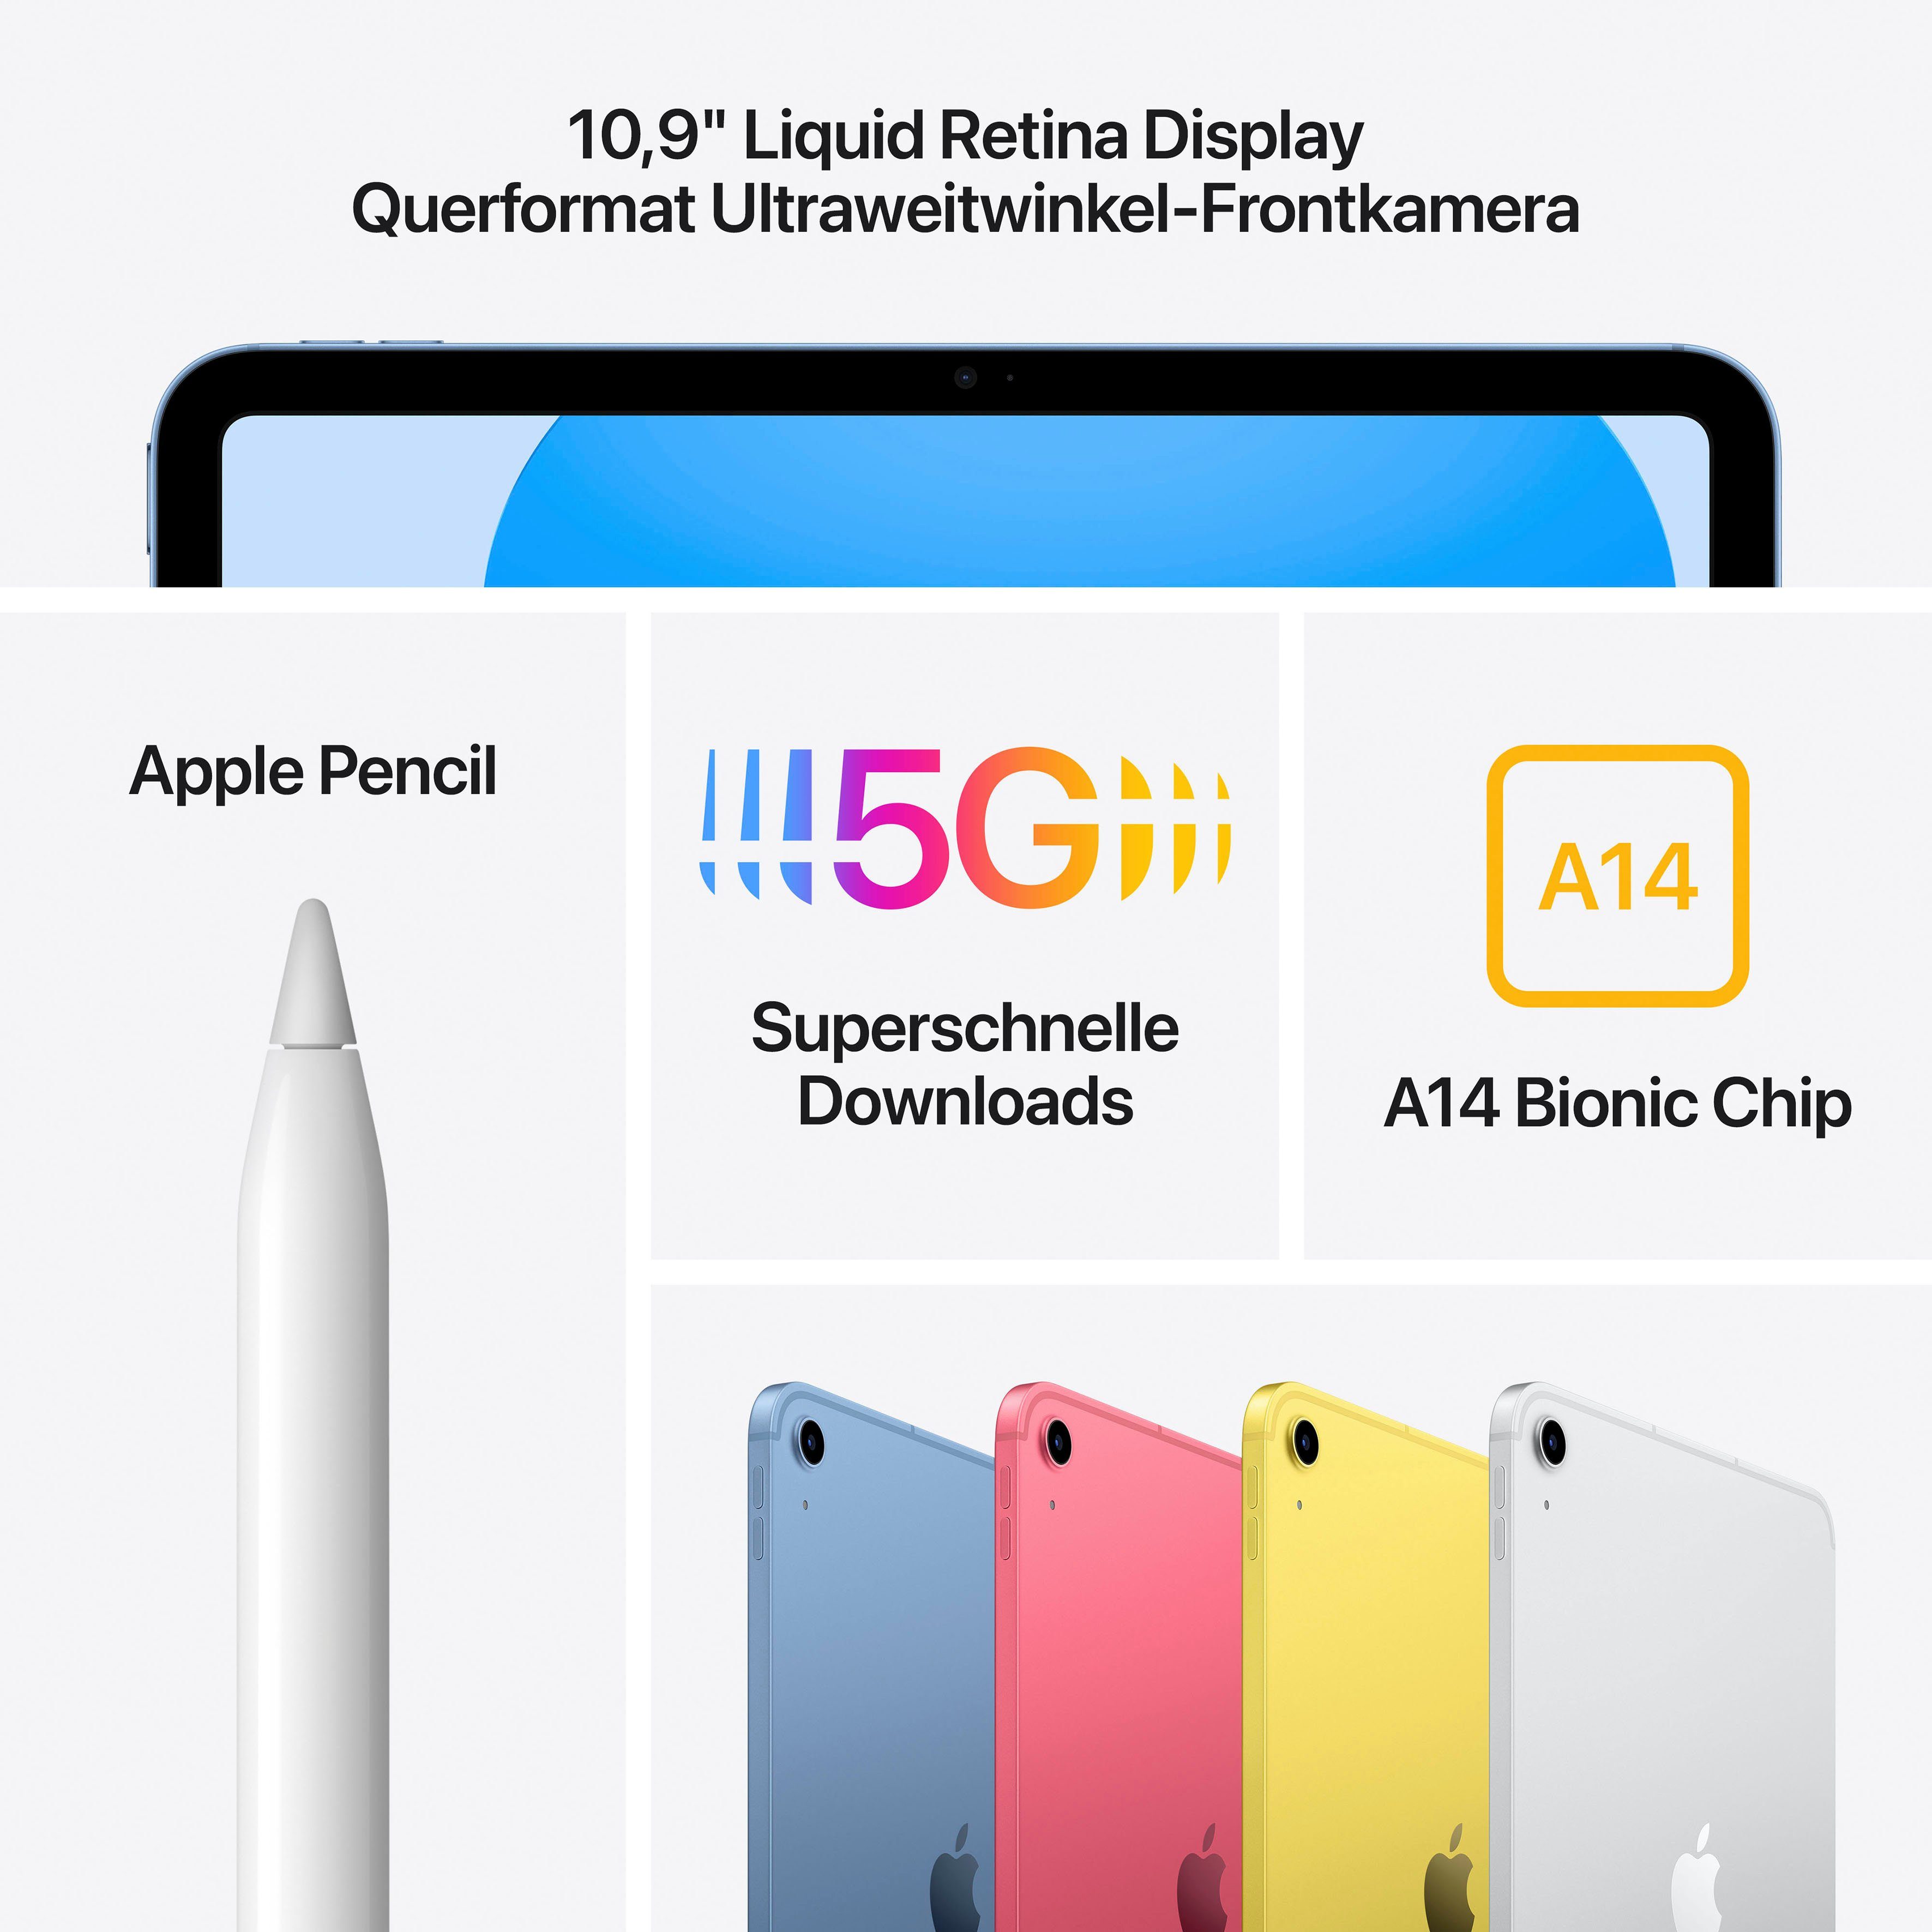 Apple iPad 2022 Wi-Fi + (10 5G) Generation) (10,9", yellow GB, iPadOS, Cellular 256 Tablet